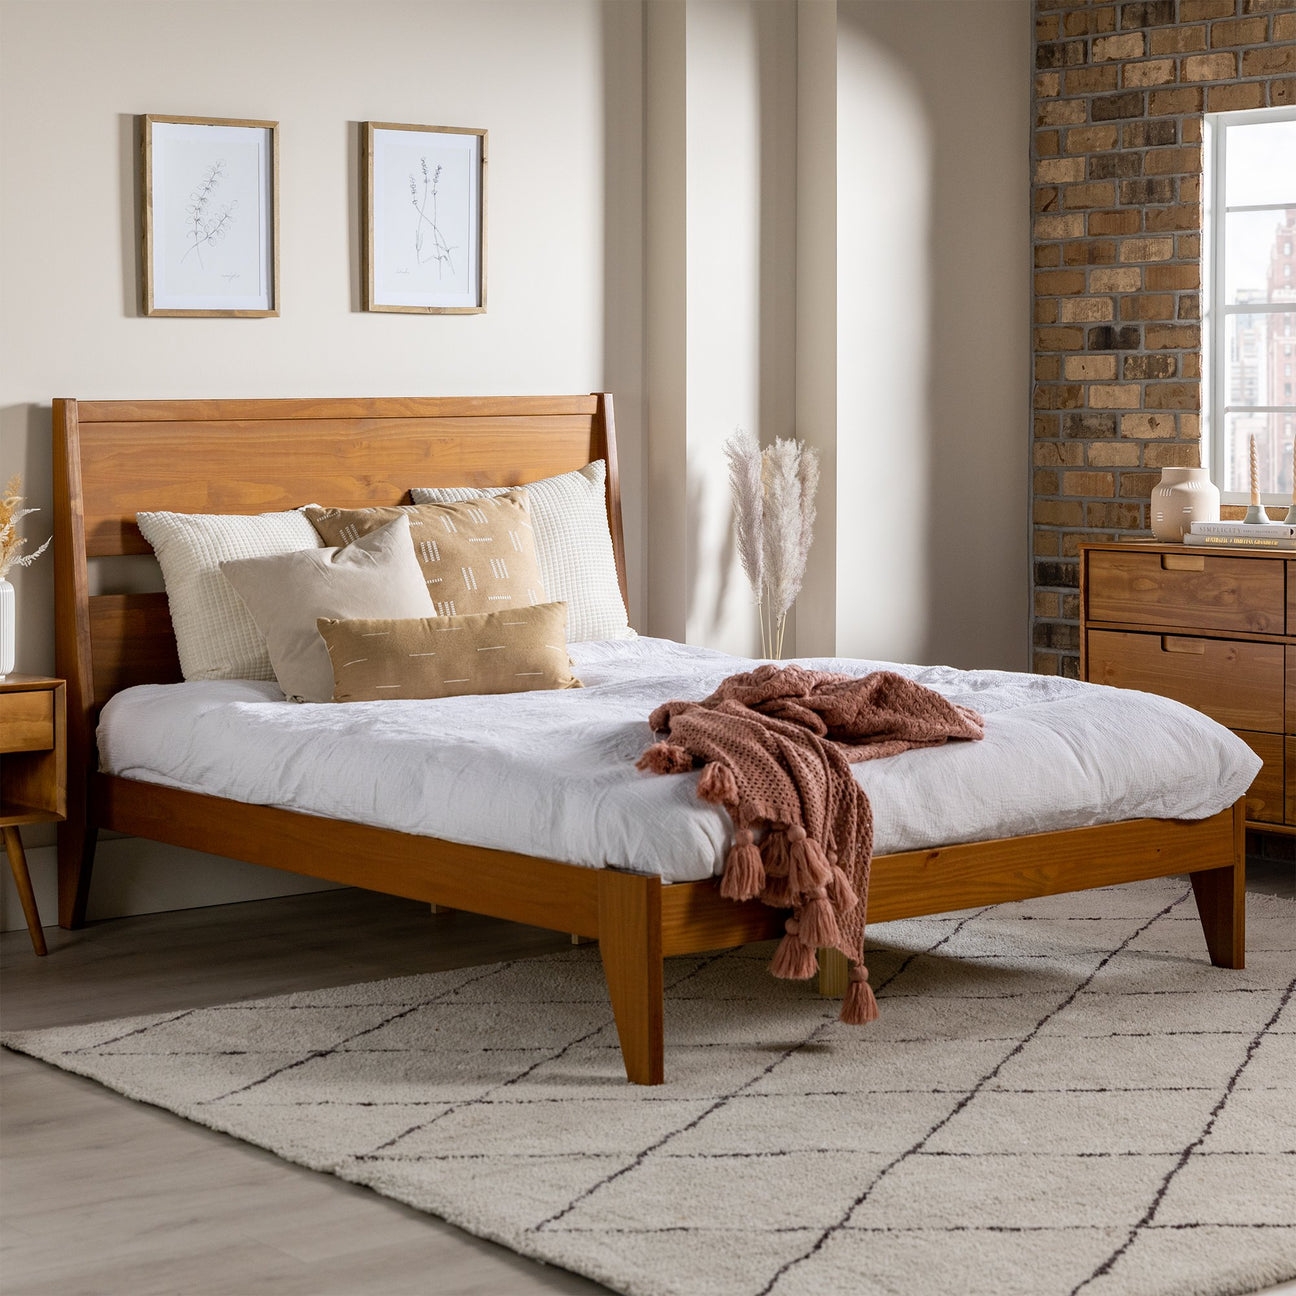 Malyn Queen Solid Wood Modern Platform Bed - Caramel - Image 0